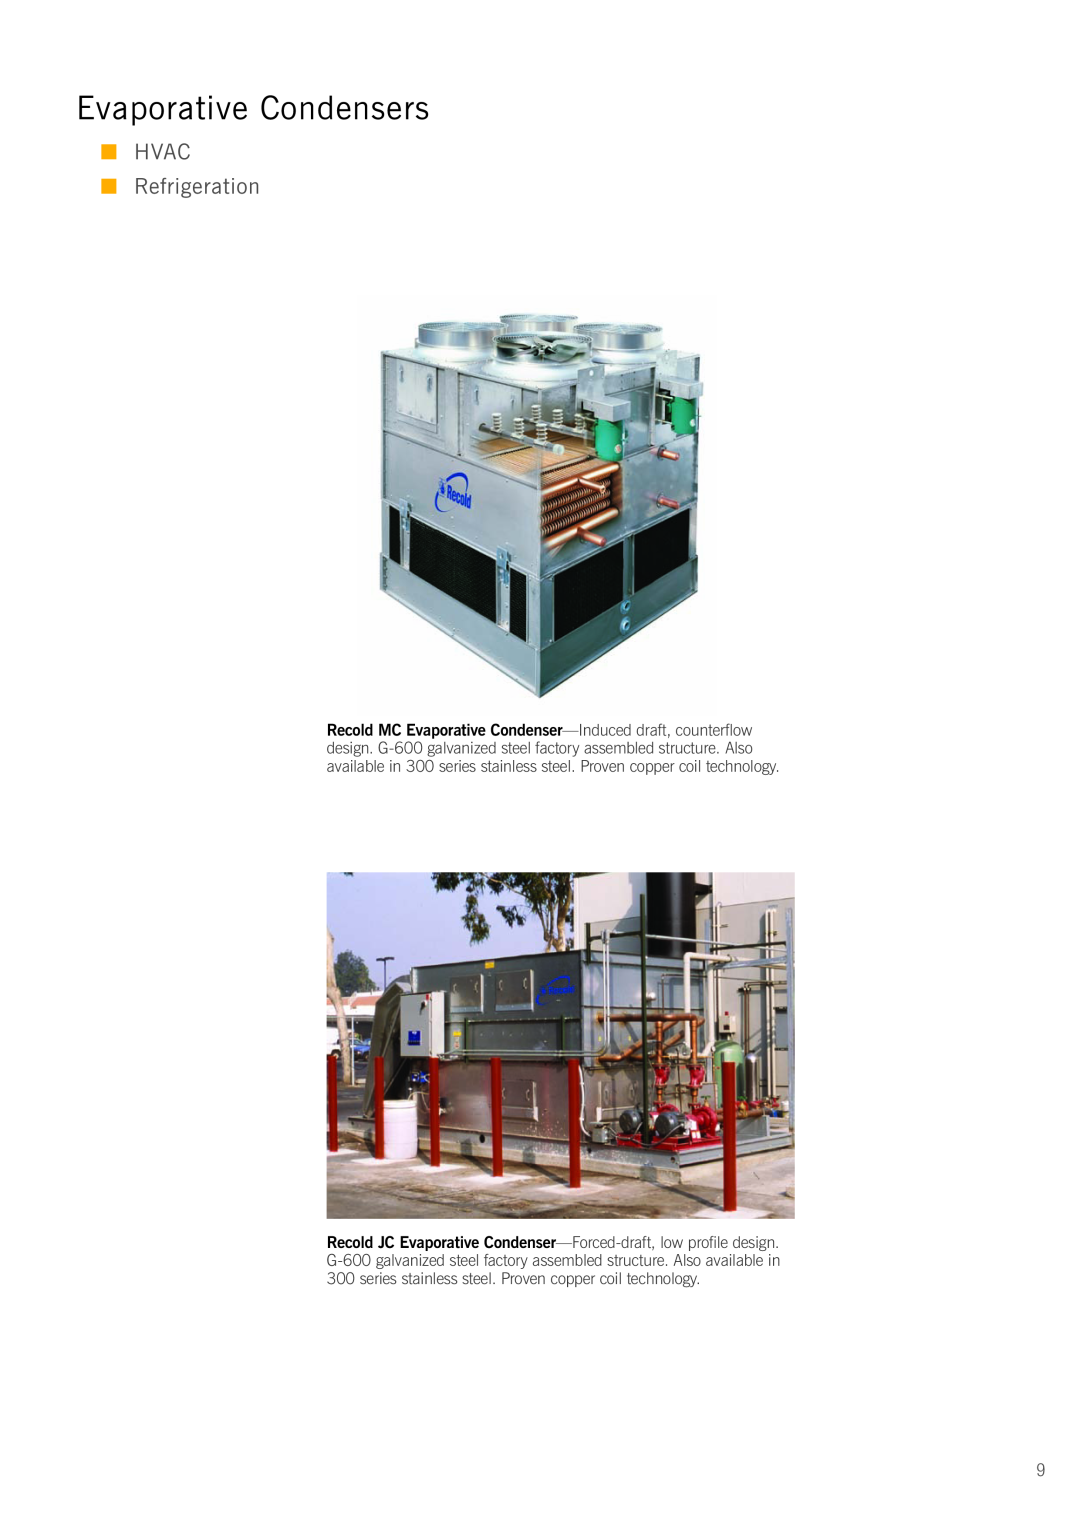 SPX Cooling Technologies 300 series, G-600 manual Evaporative Condensers, HVAC Refrigeration 